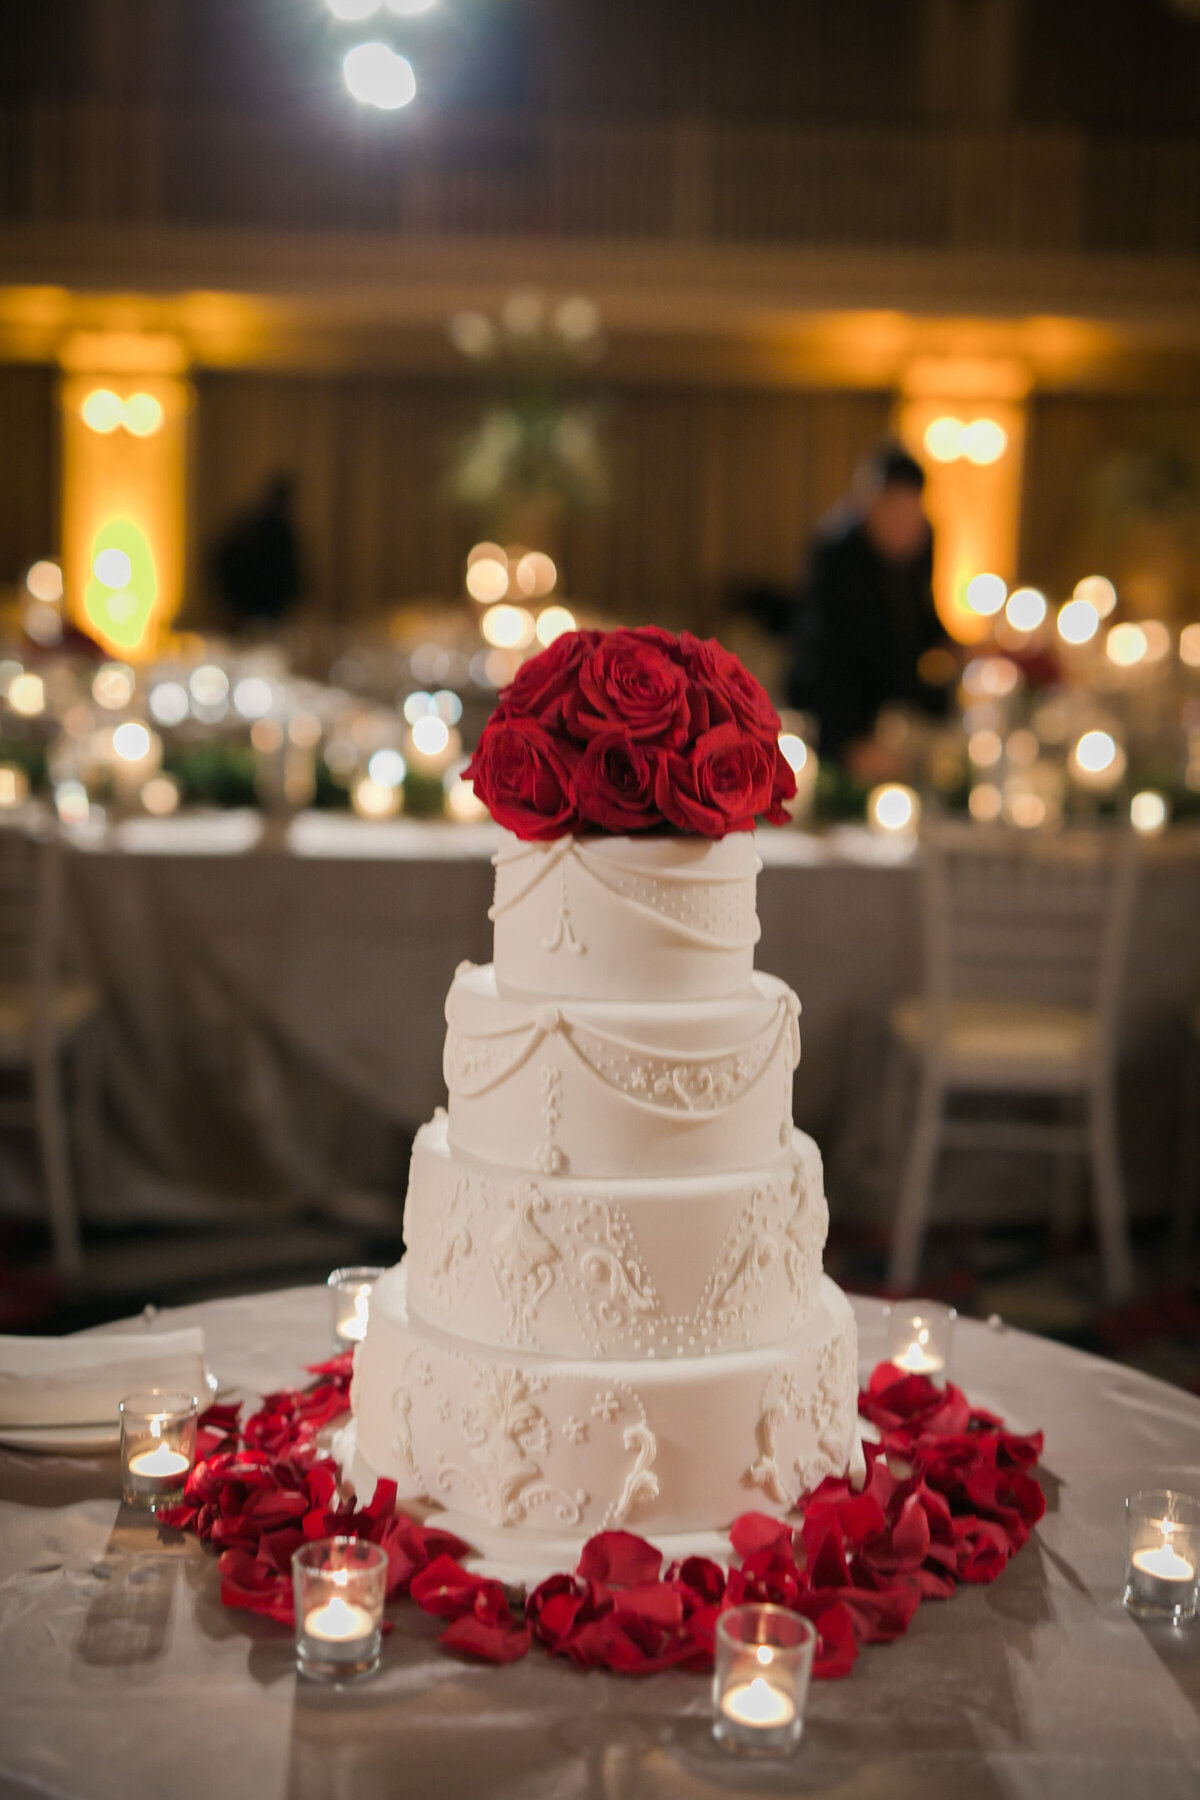 Drake-Hotel-Chicago-Weddings-Cake-Four-Tier-Red-Roses